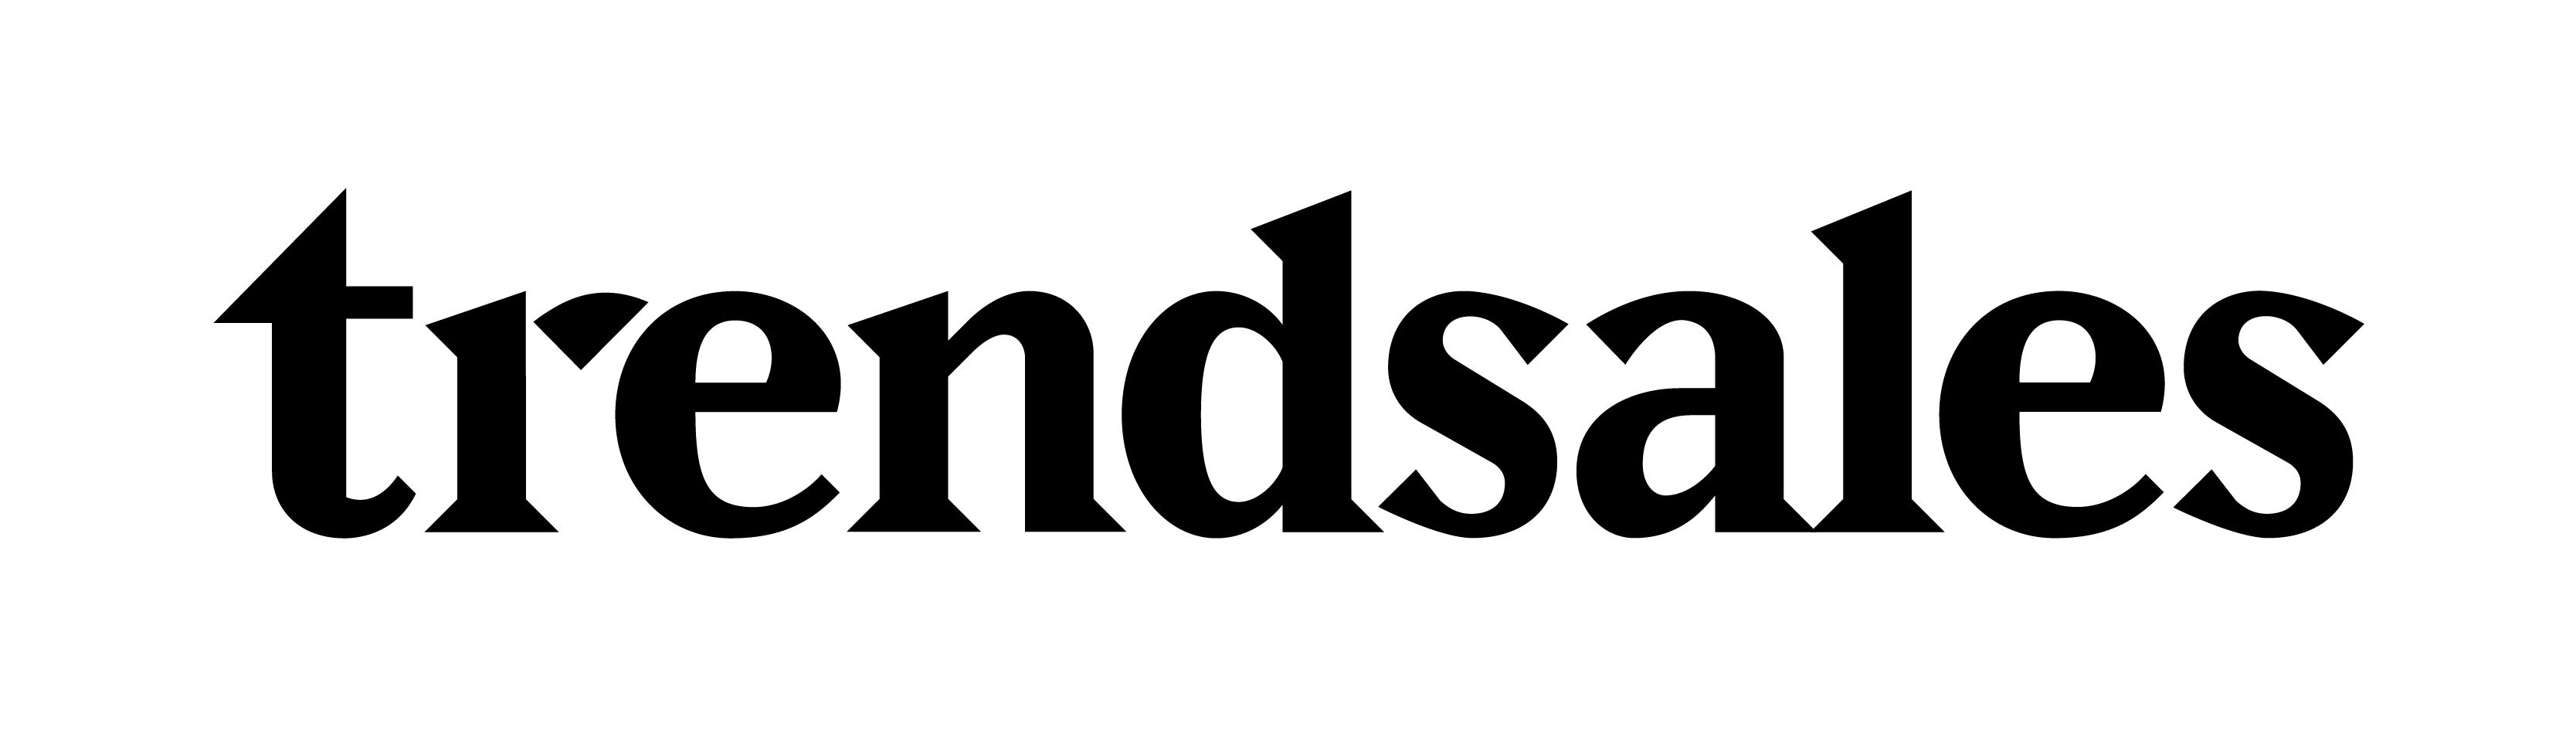 trendsales logo